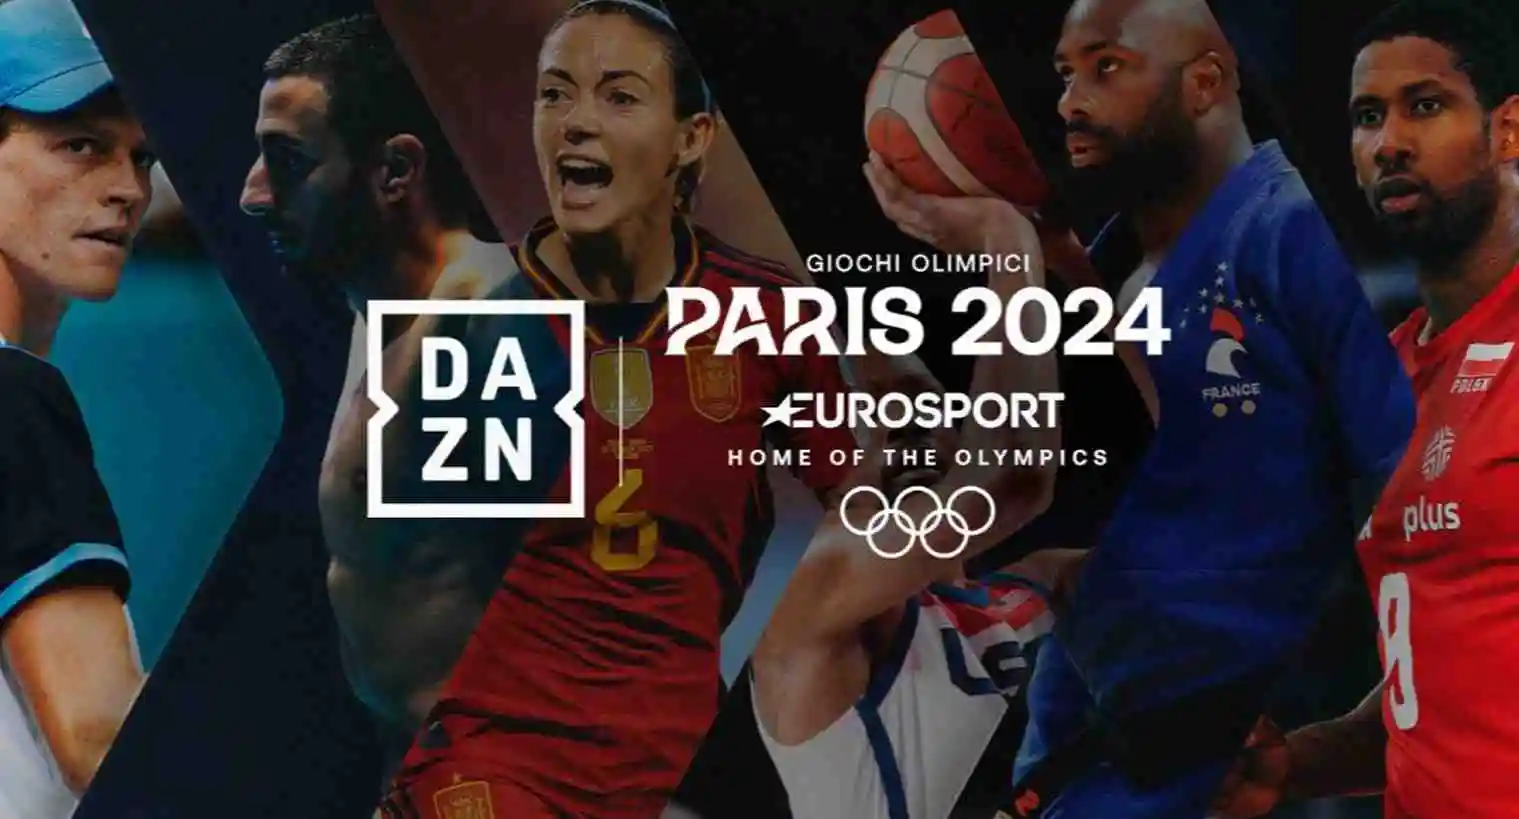 Giochi Olimpici Parigi 2024, 6 canali aggiuntivi Warner Bros. Discovery su DAZN